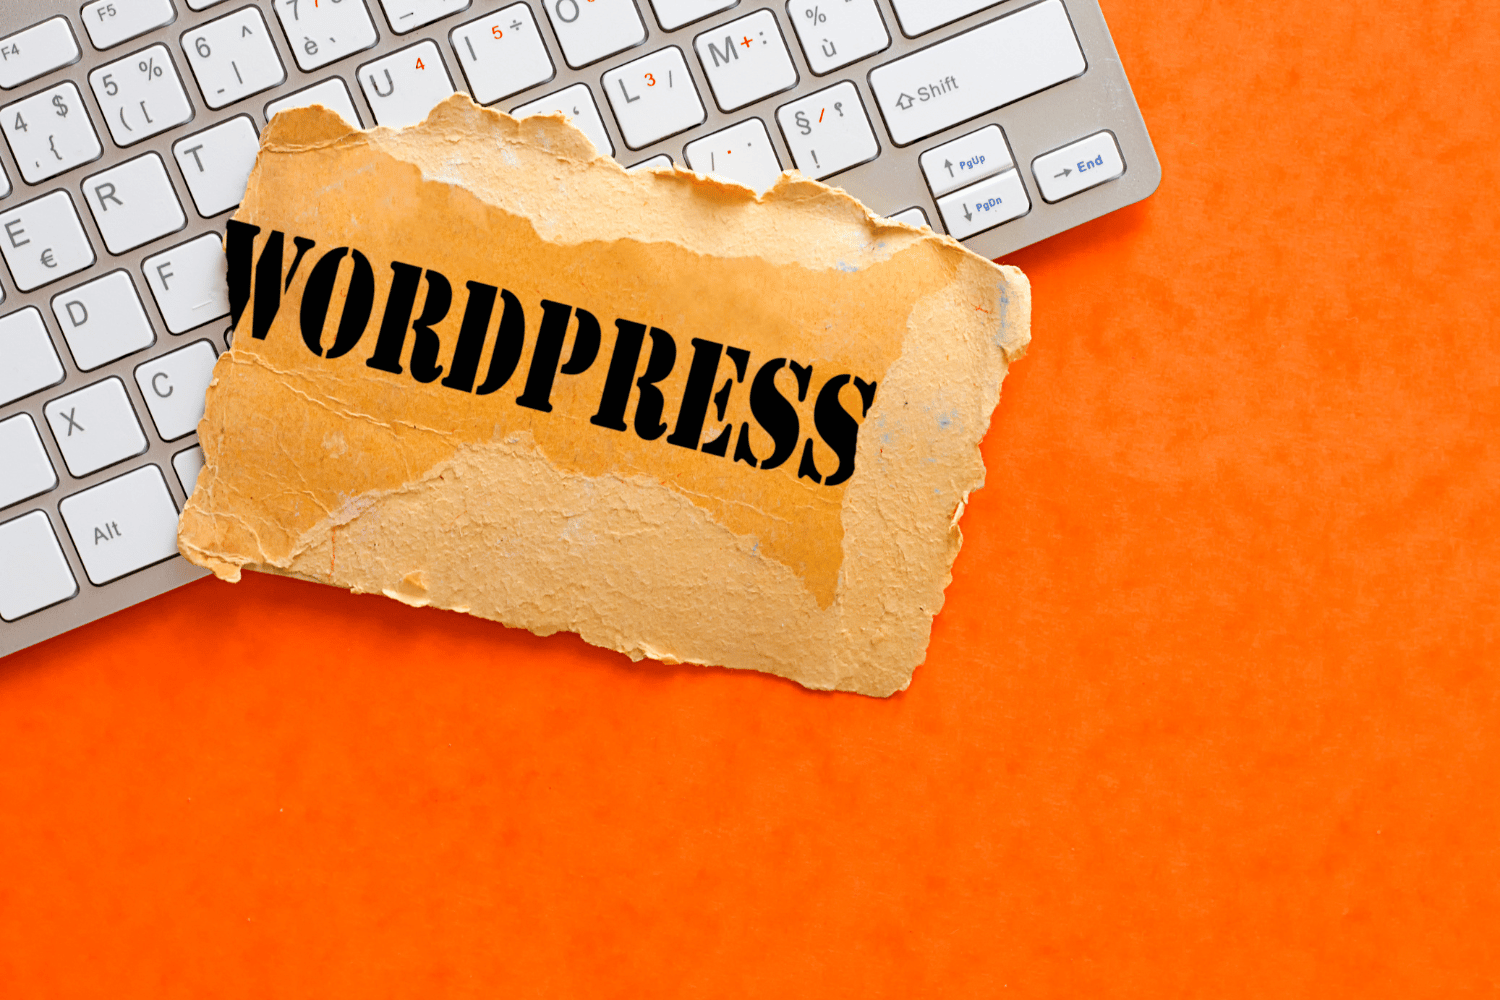 Wordpress written on cardboard with a keyboard in the background